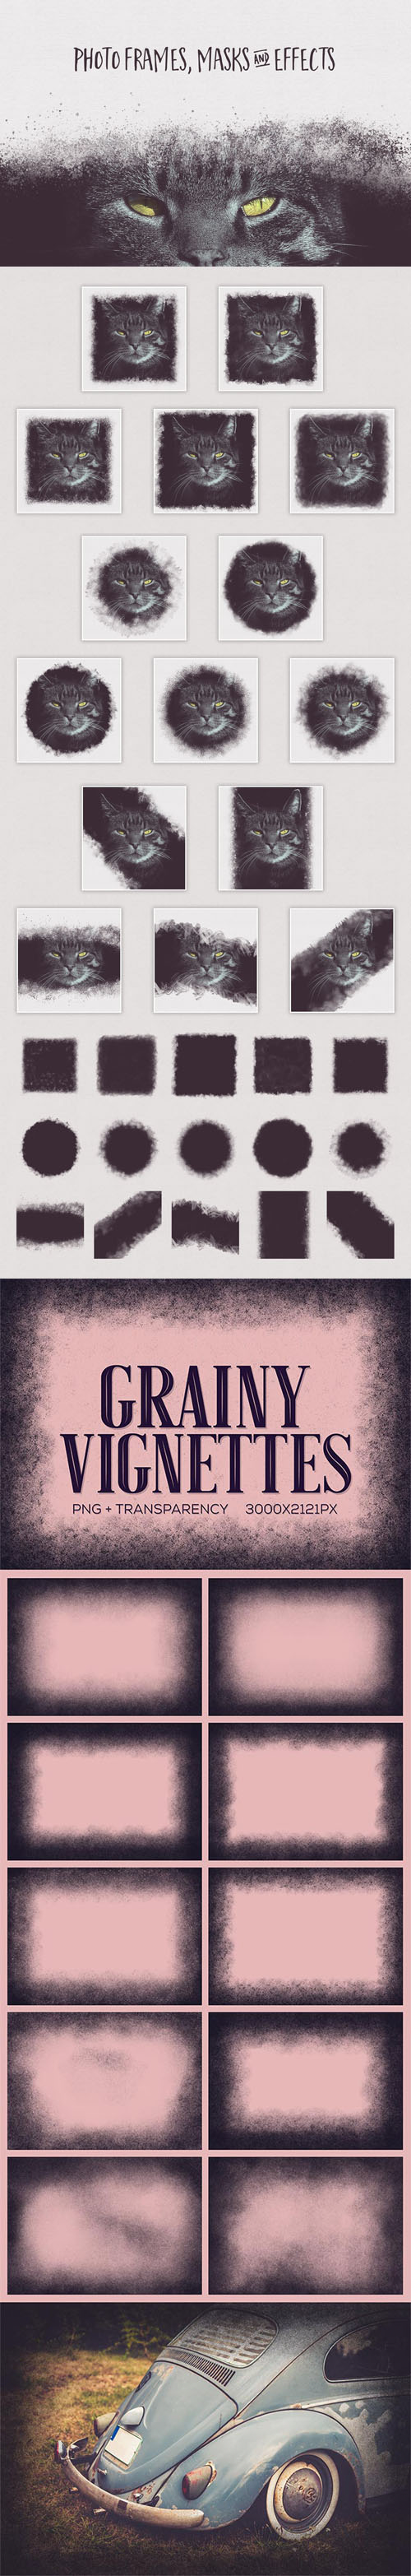 25 Grainy Vignette Textures, Frames, Masks and Effects